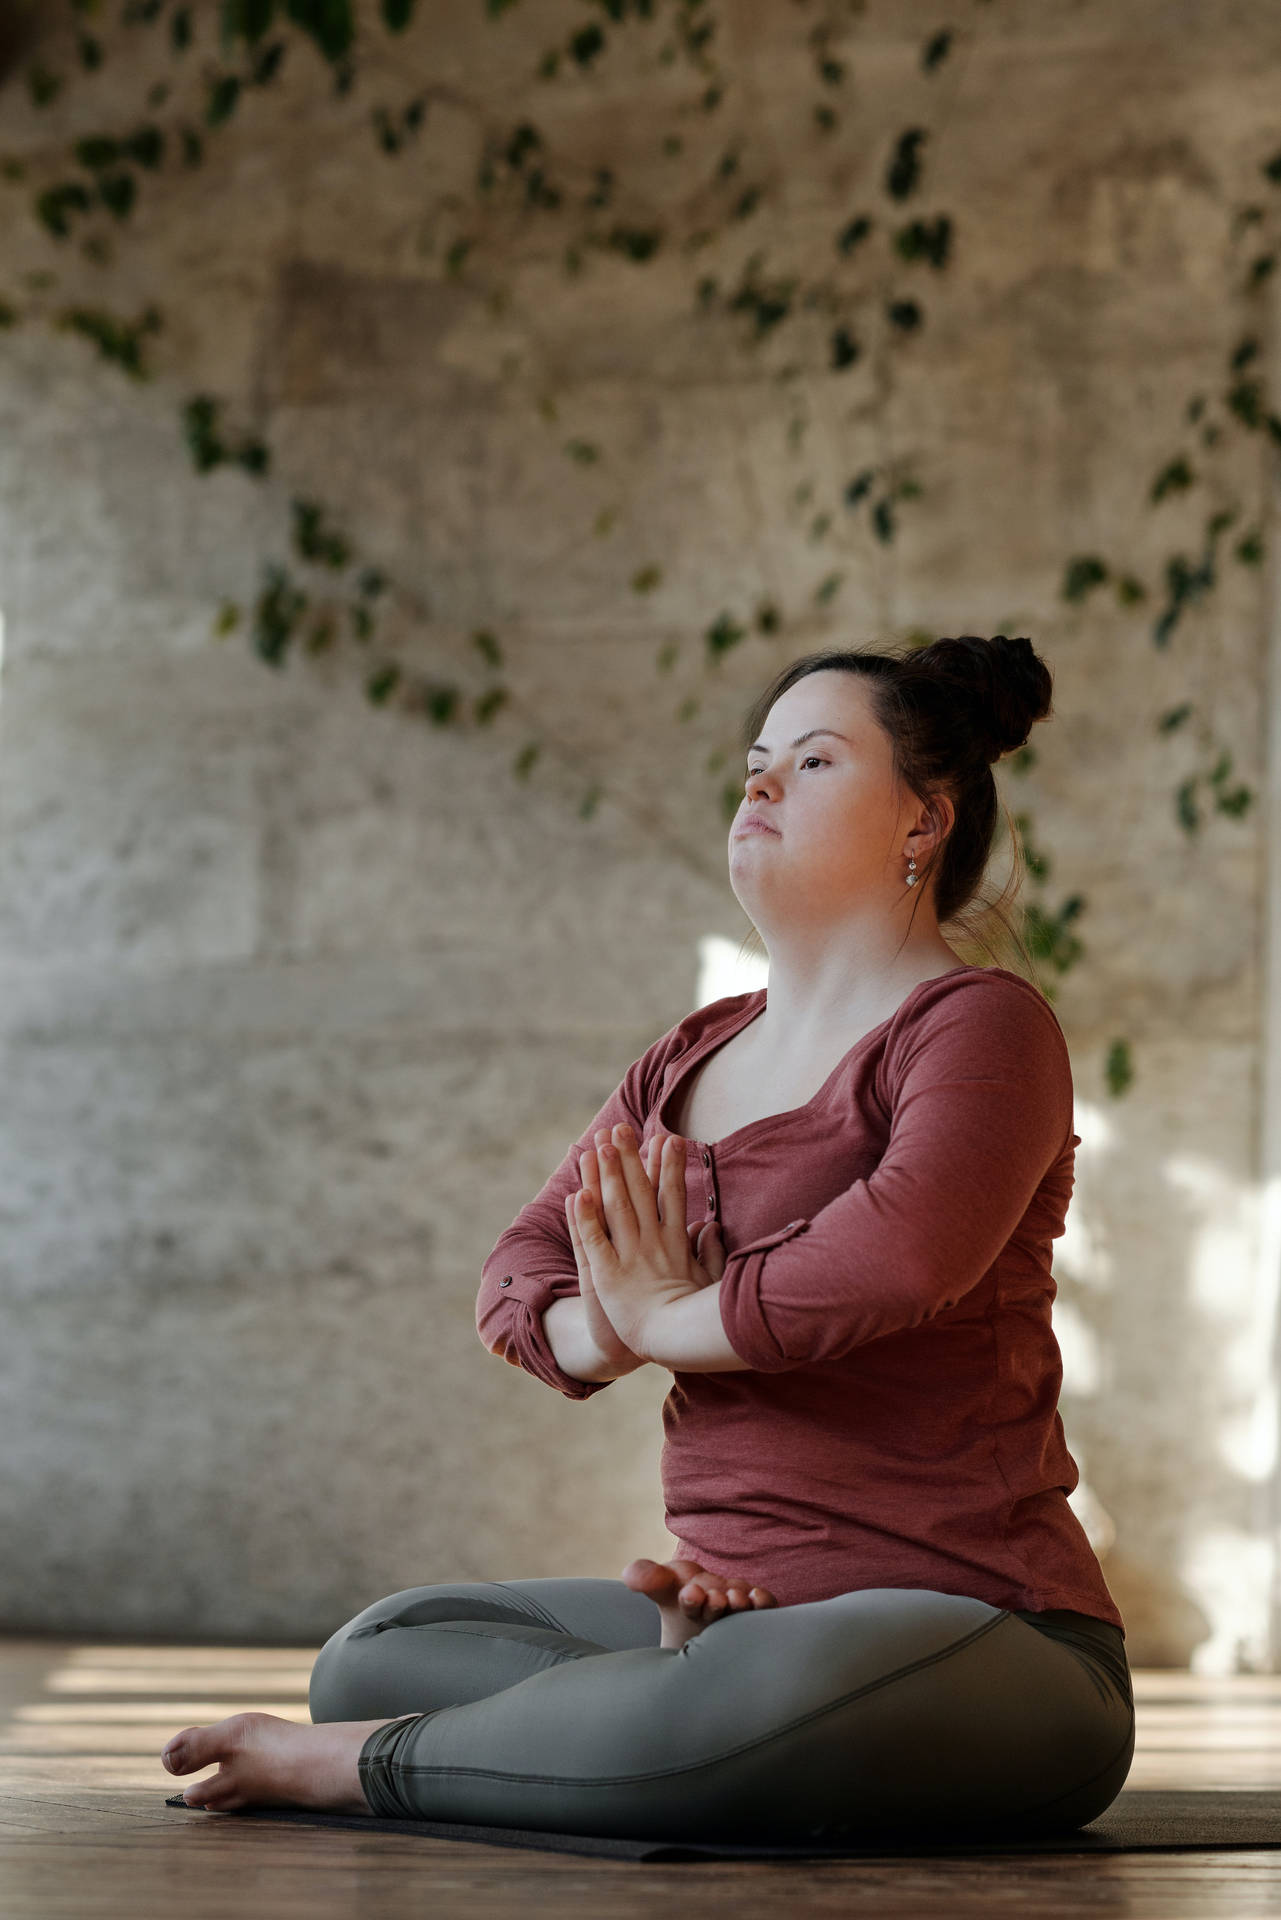 Girl Meditating Alone Wallpaper